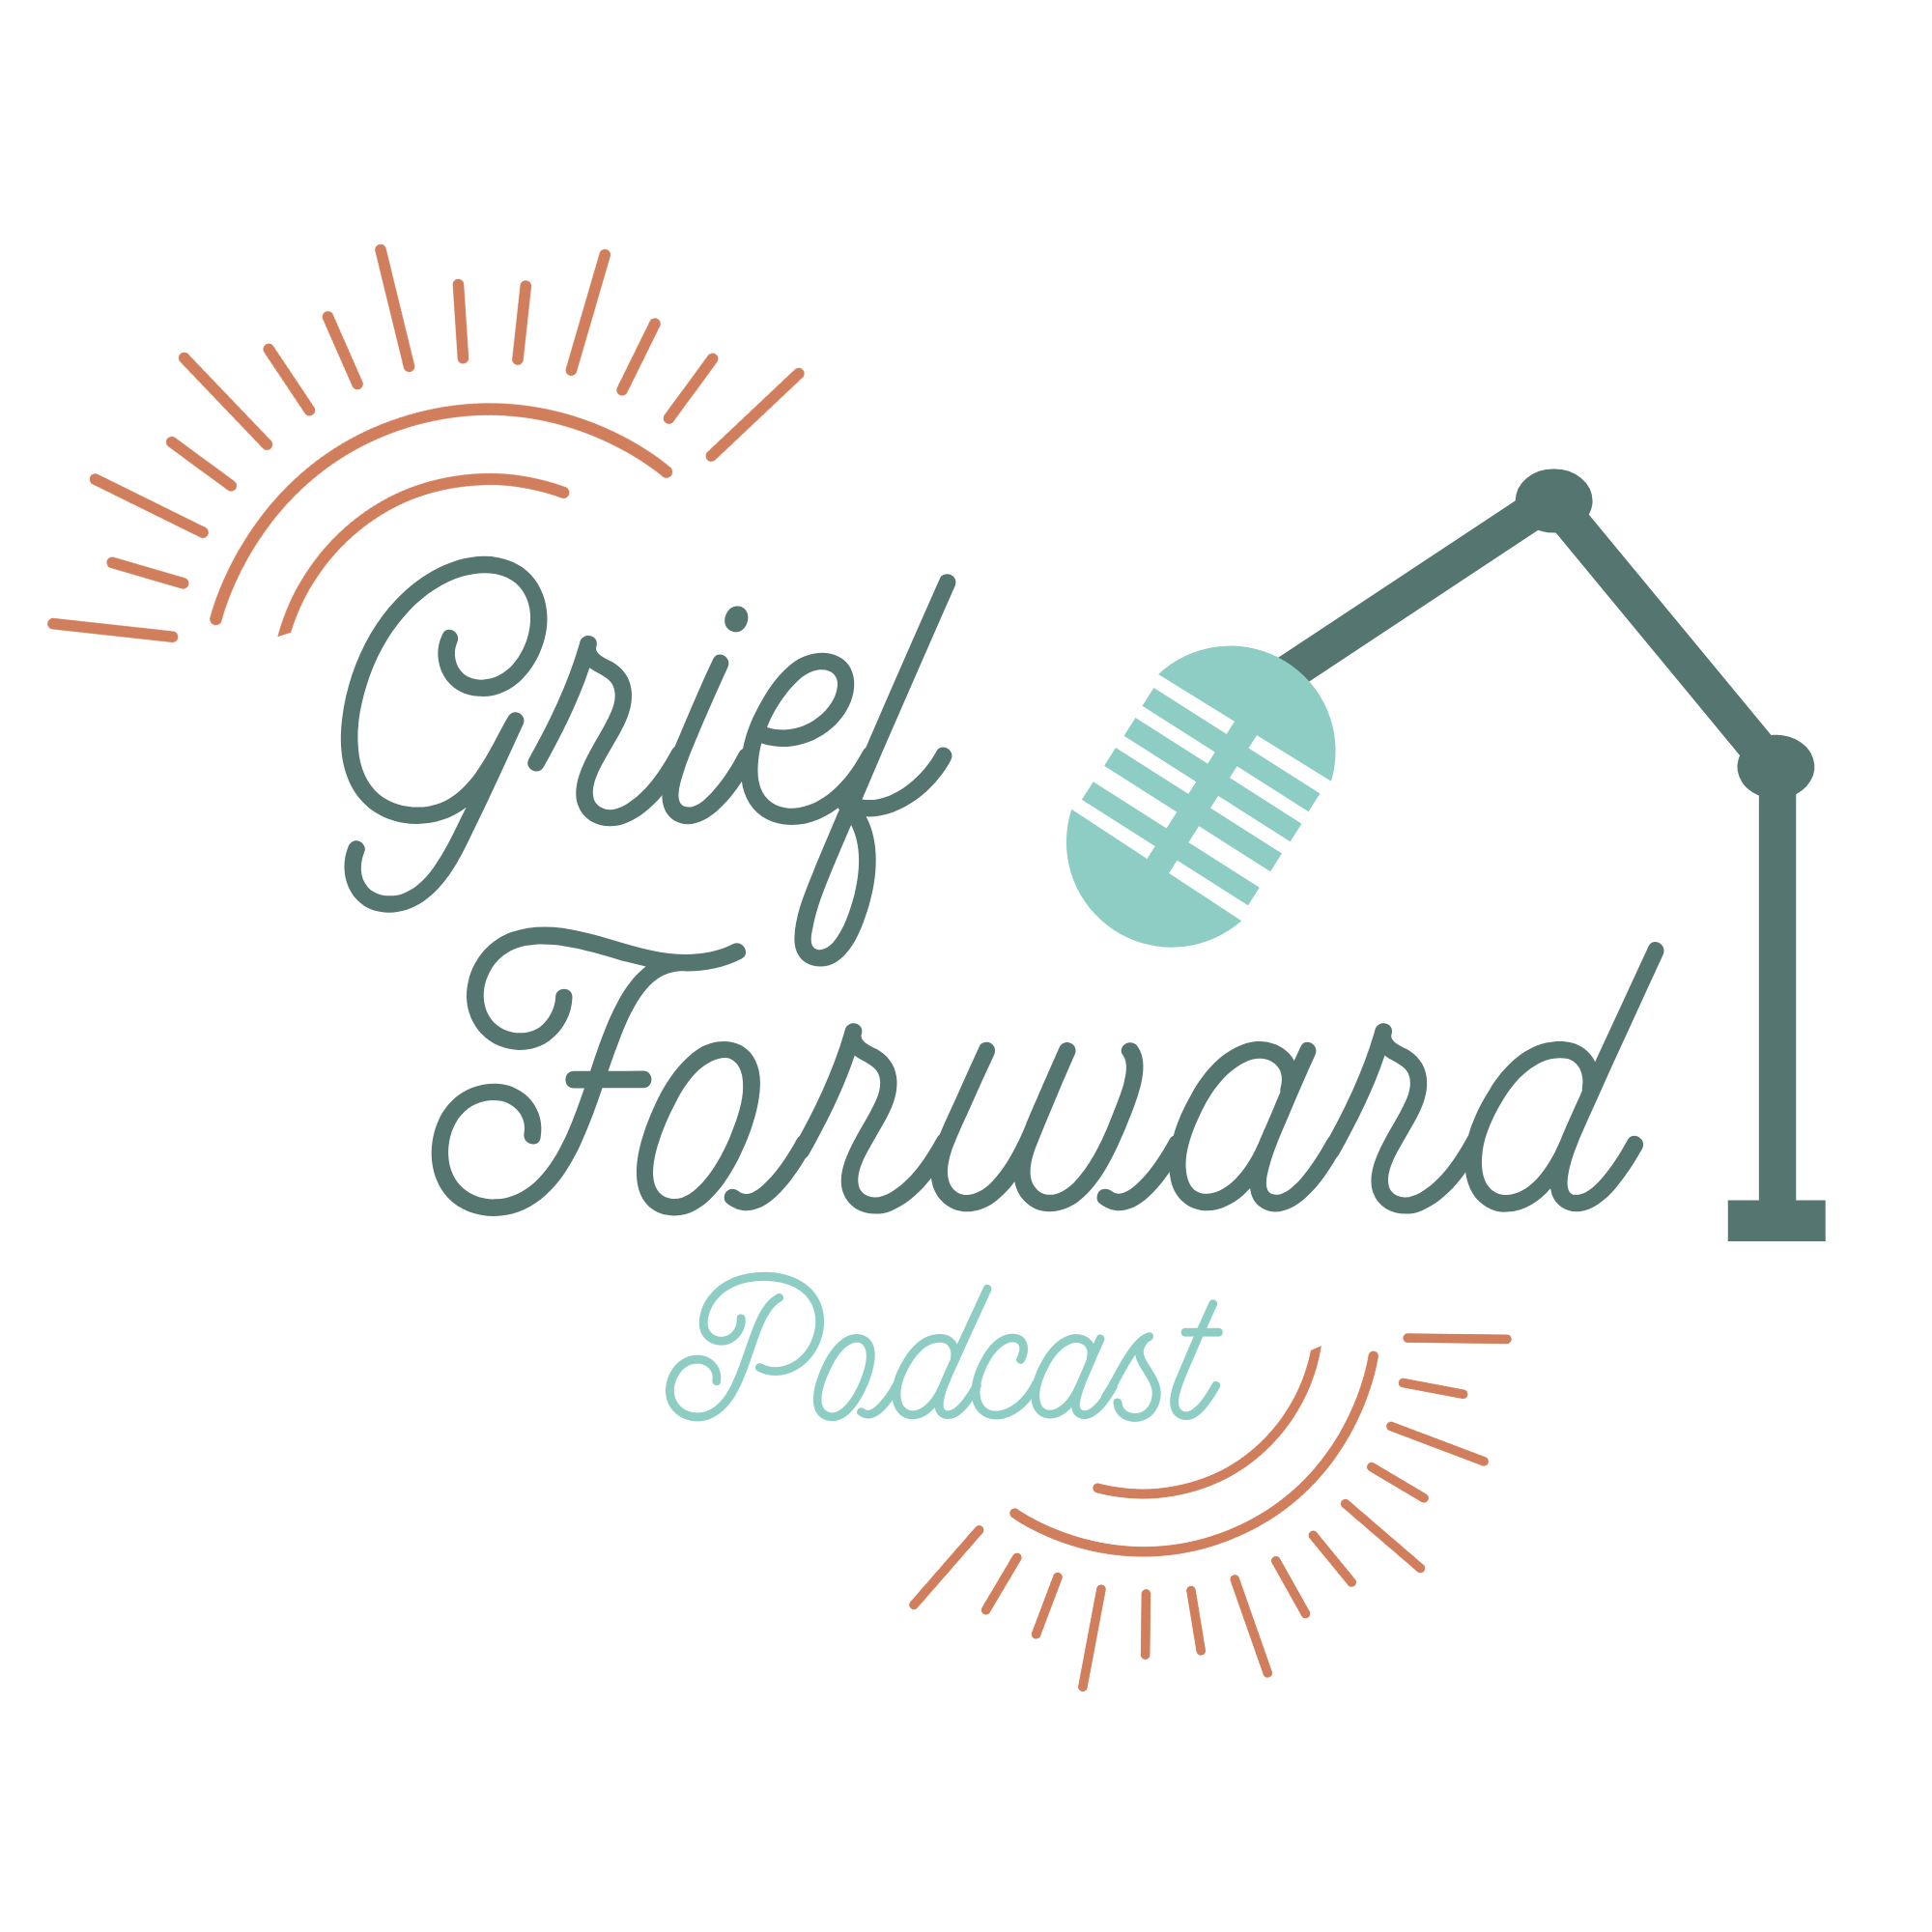 Grief Forward